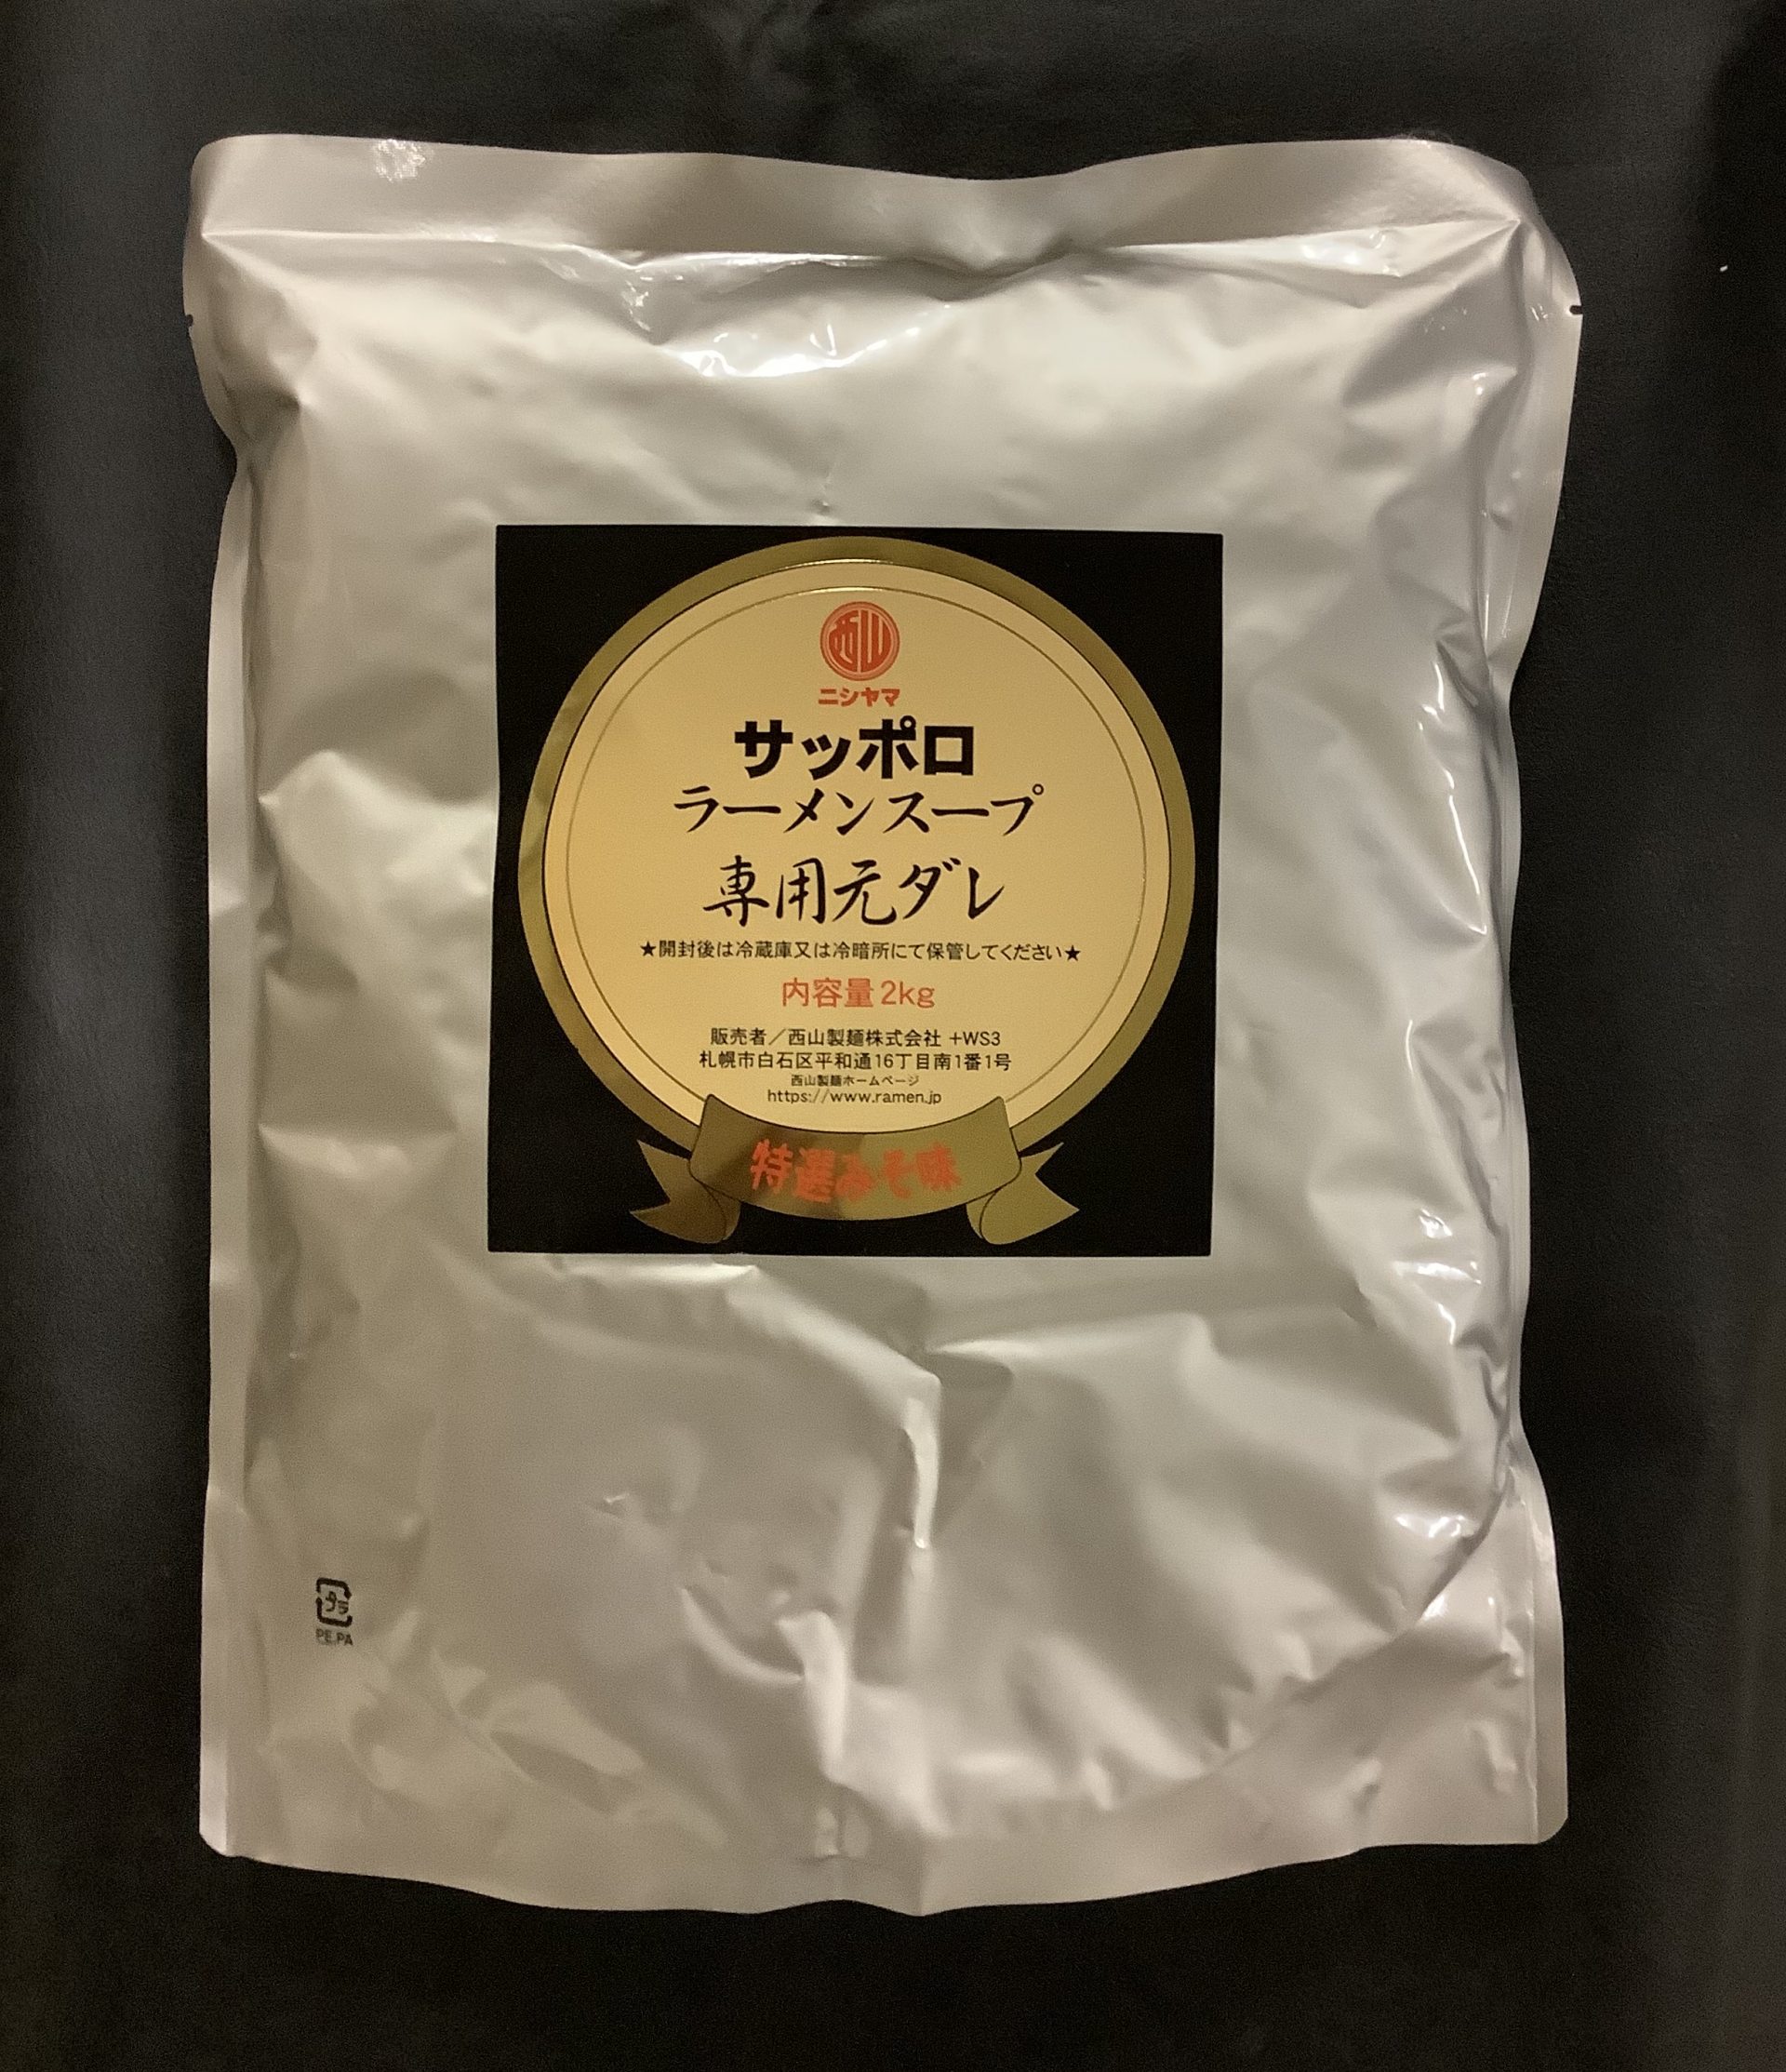 Nishiyama Miso Tare Kuro Label